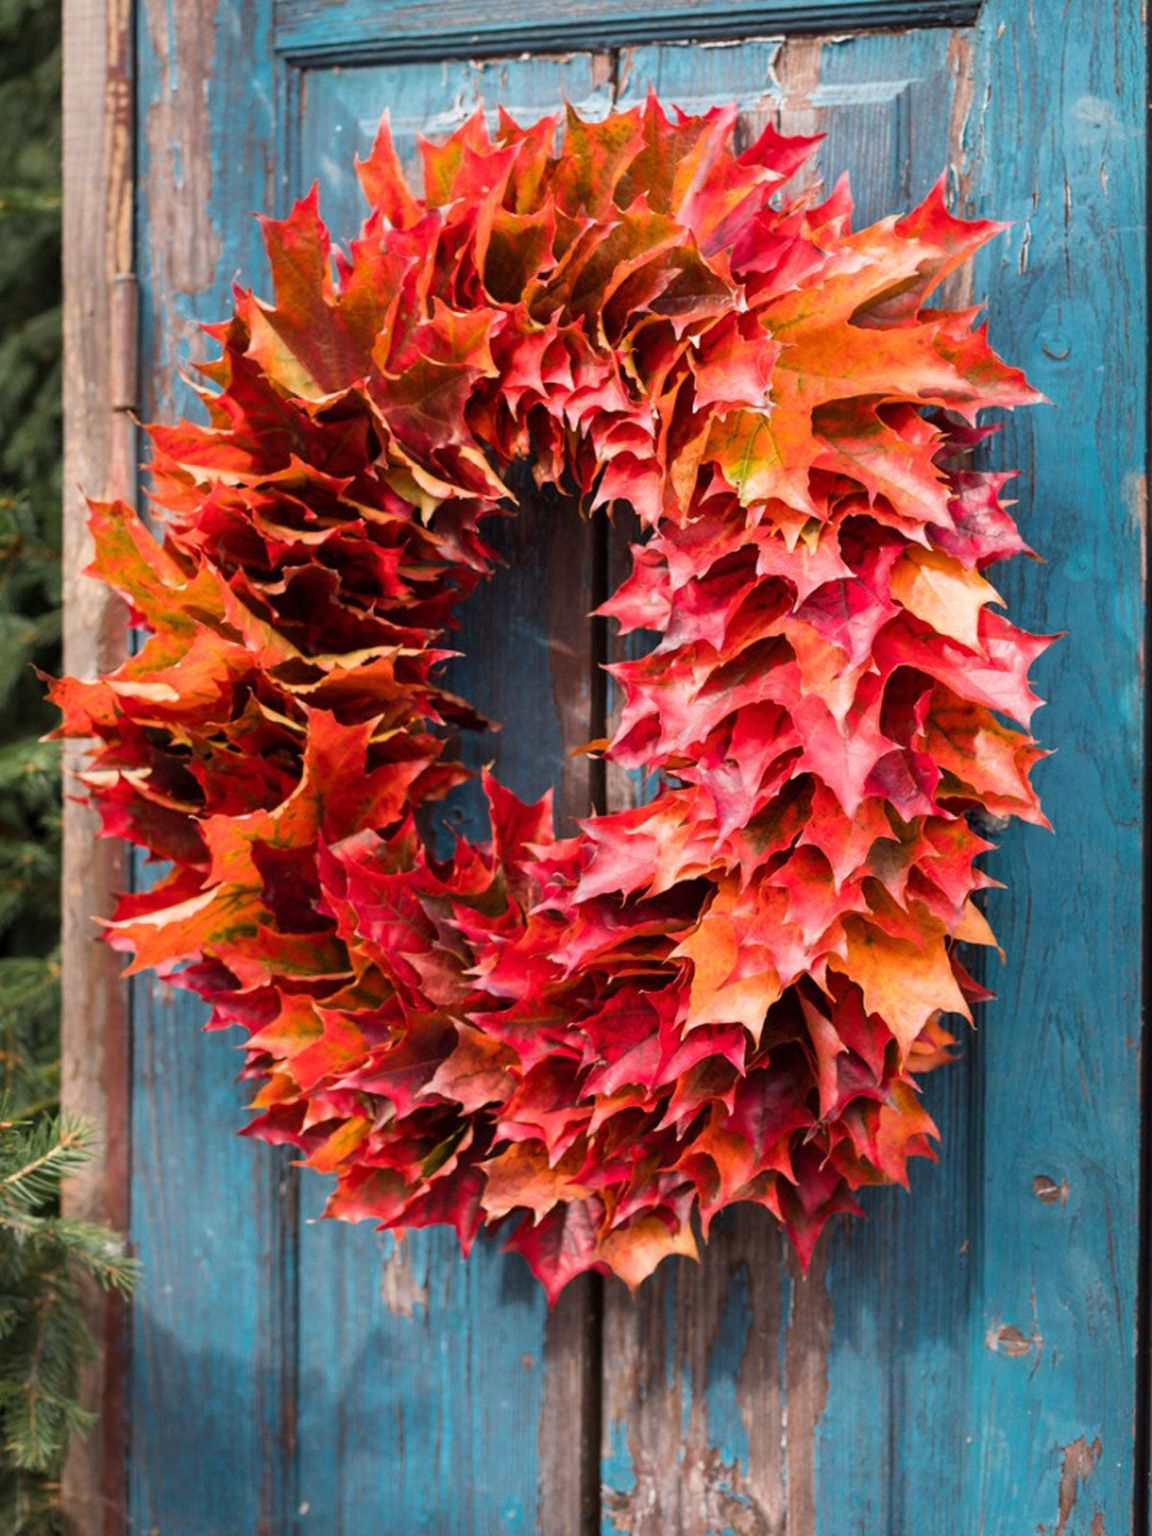 Autumn Leaf Wreath Ideas: How To Make An Autumn Leaf Wreath